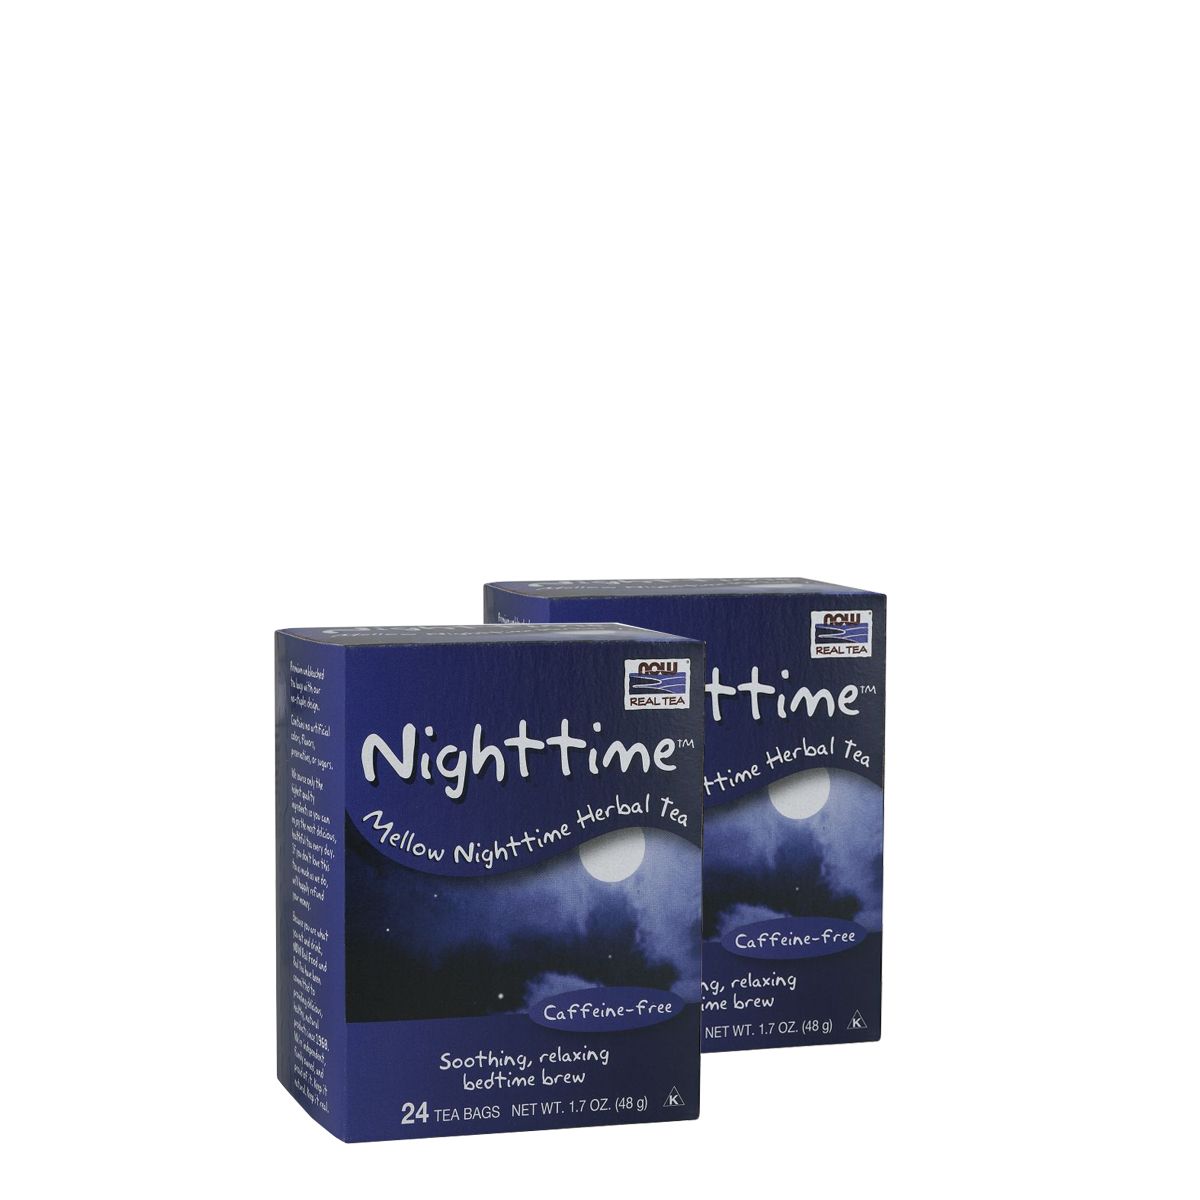 Alvássegítő gyógynövény tea, Now Nighttime Tea, 2x24 adag, 2x48 g